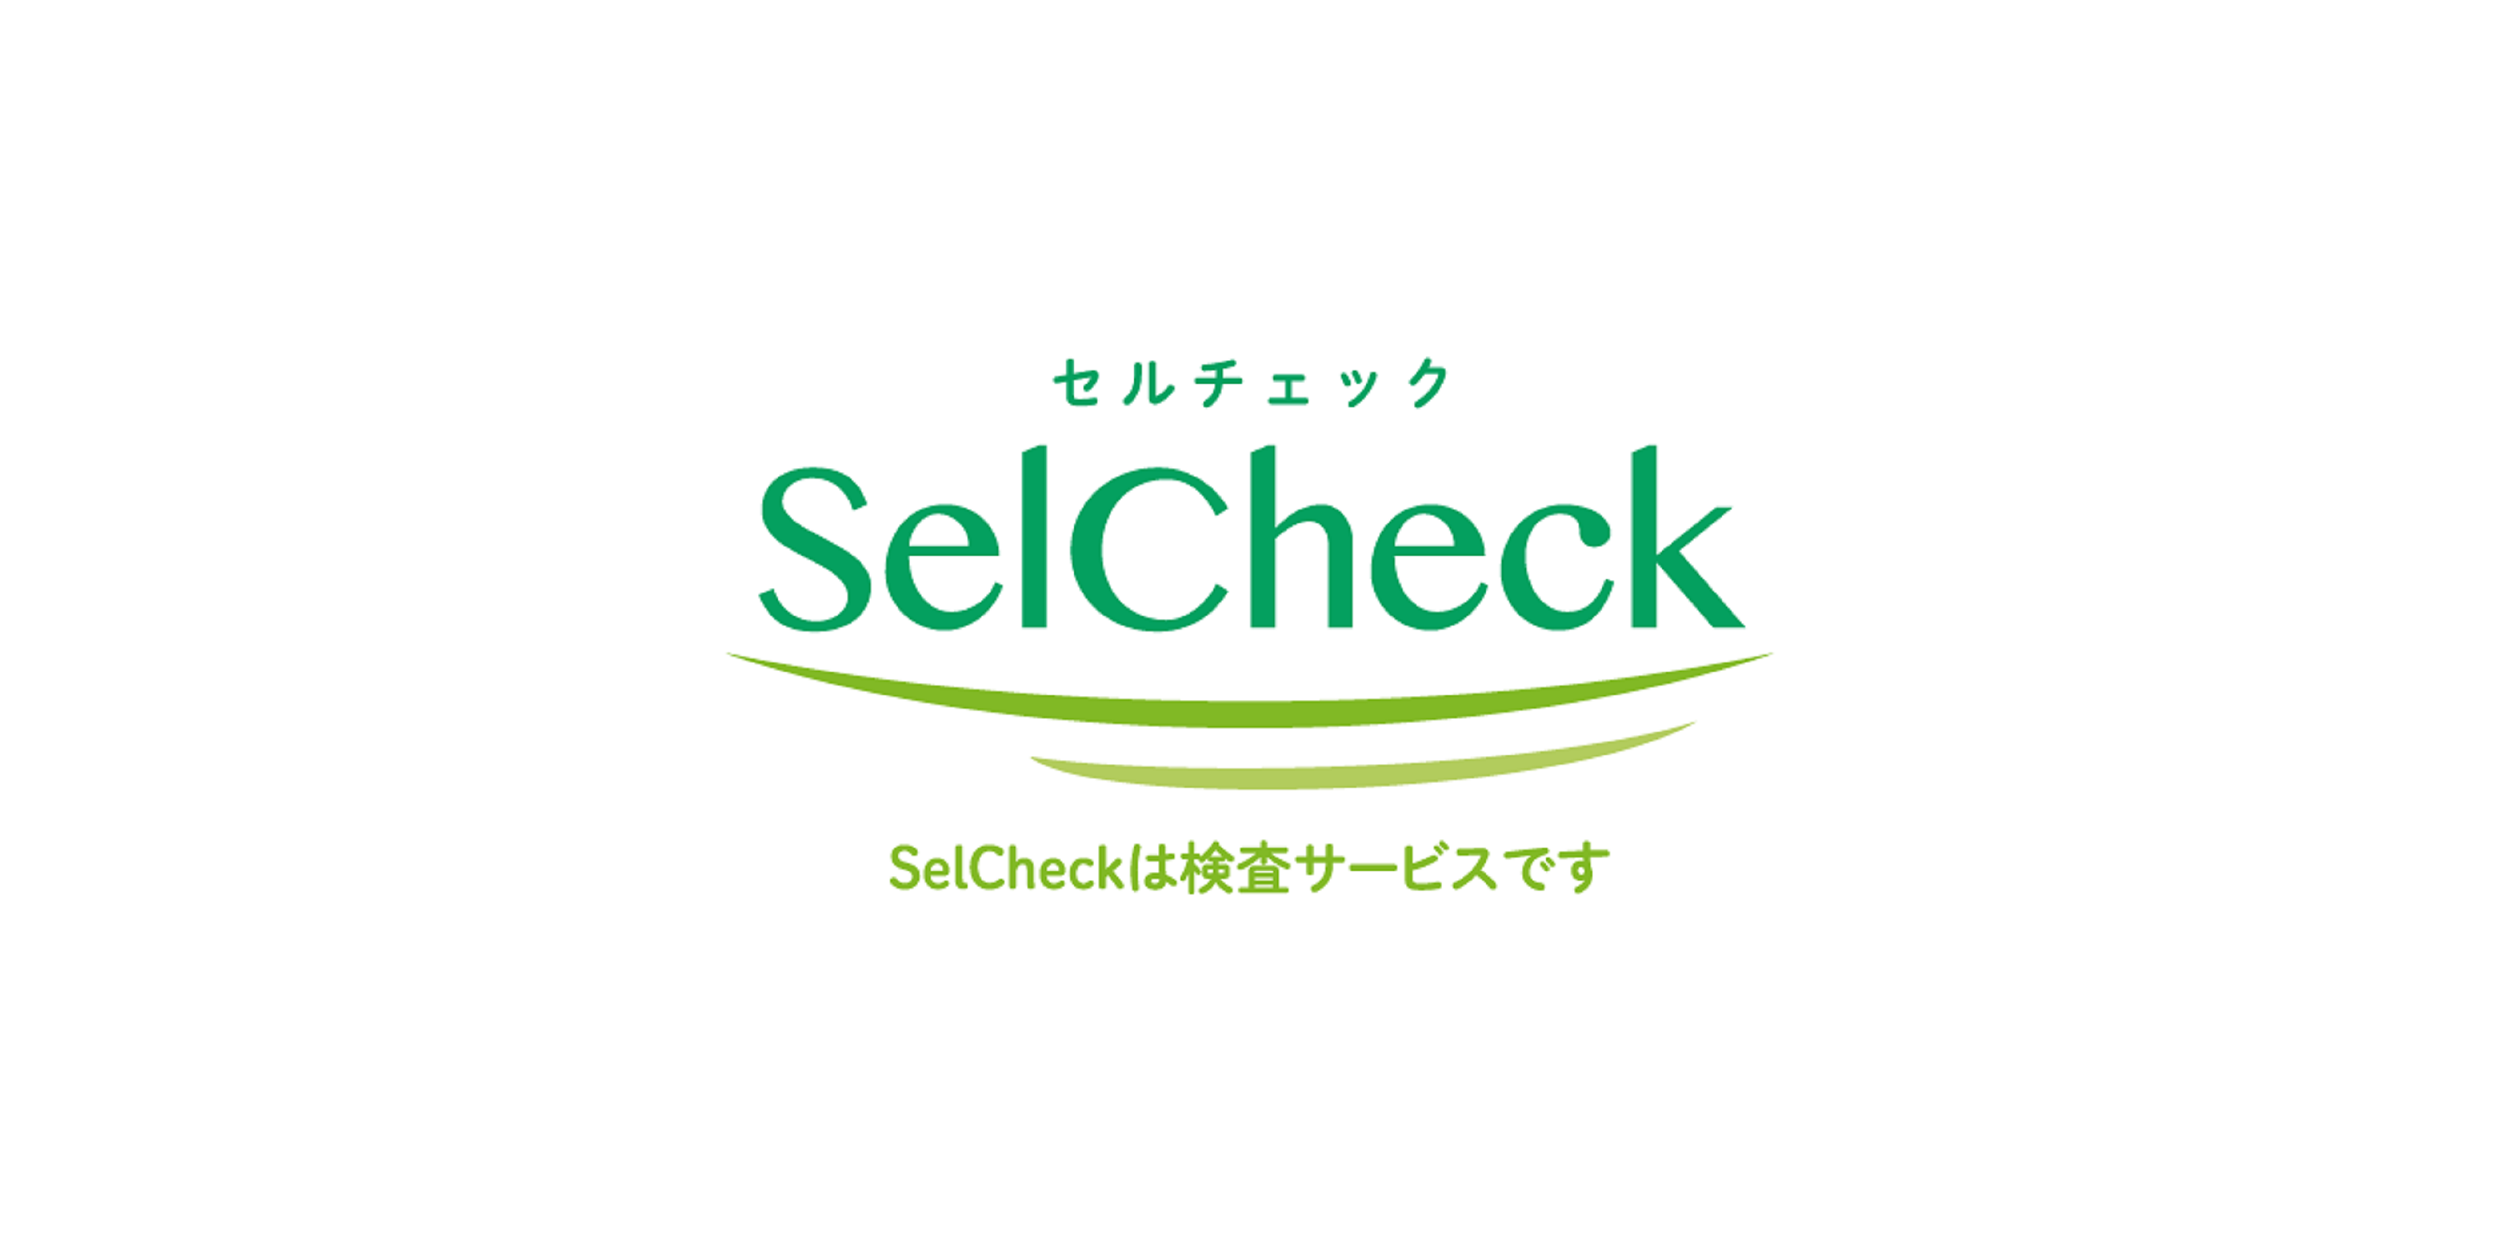 SelCheck